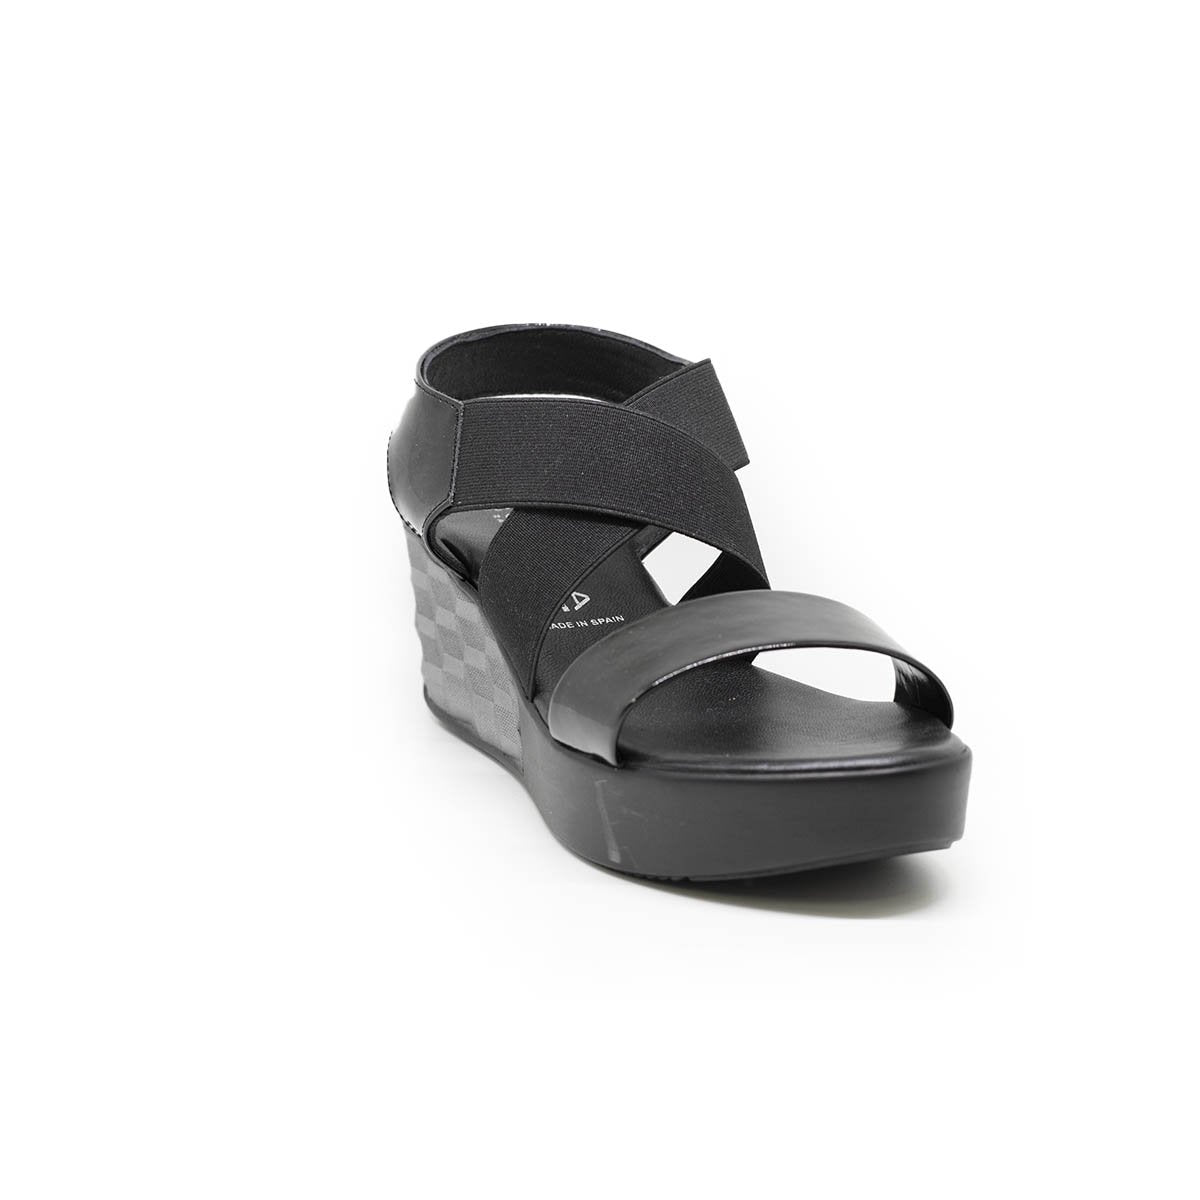 Ash Cosmos | Women's Black Wedge Sandals | Ash UK Official Site